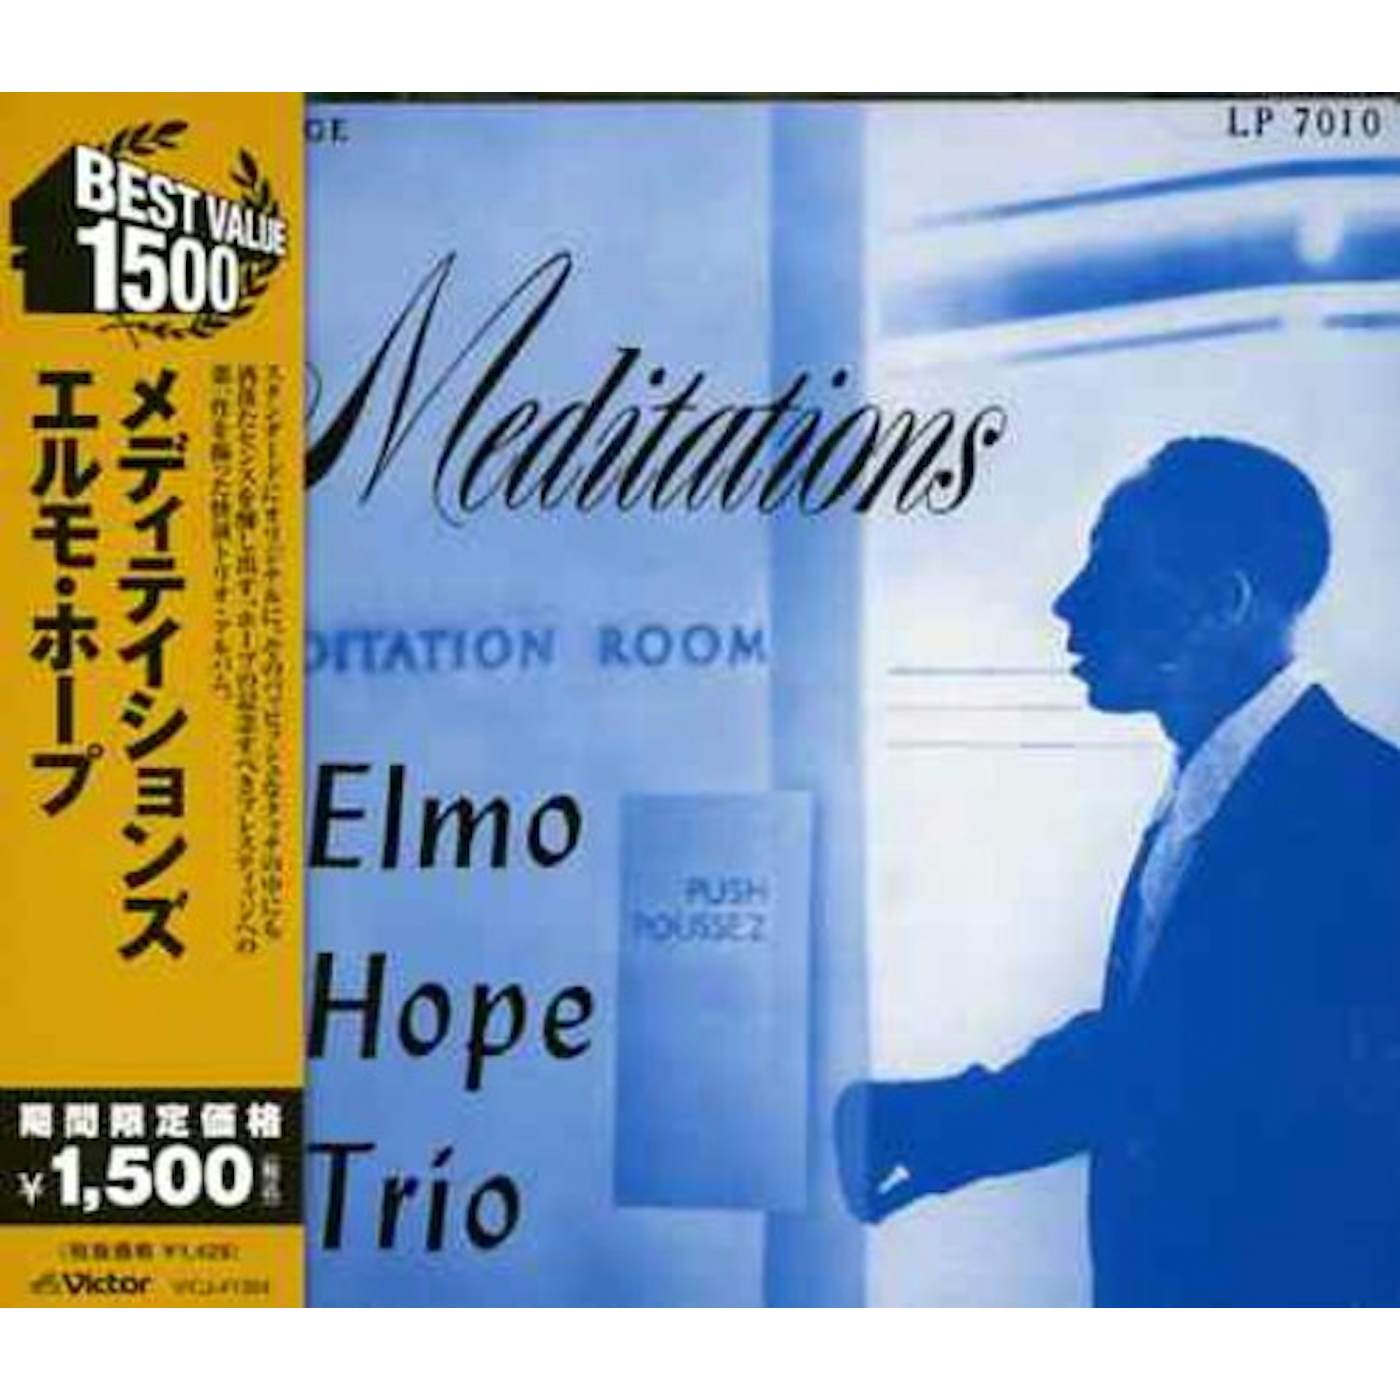 Elmo Hope MEDITATIONS CD